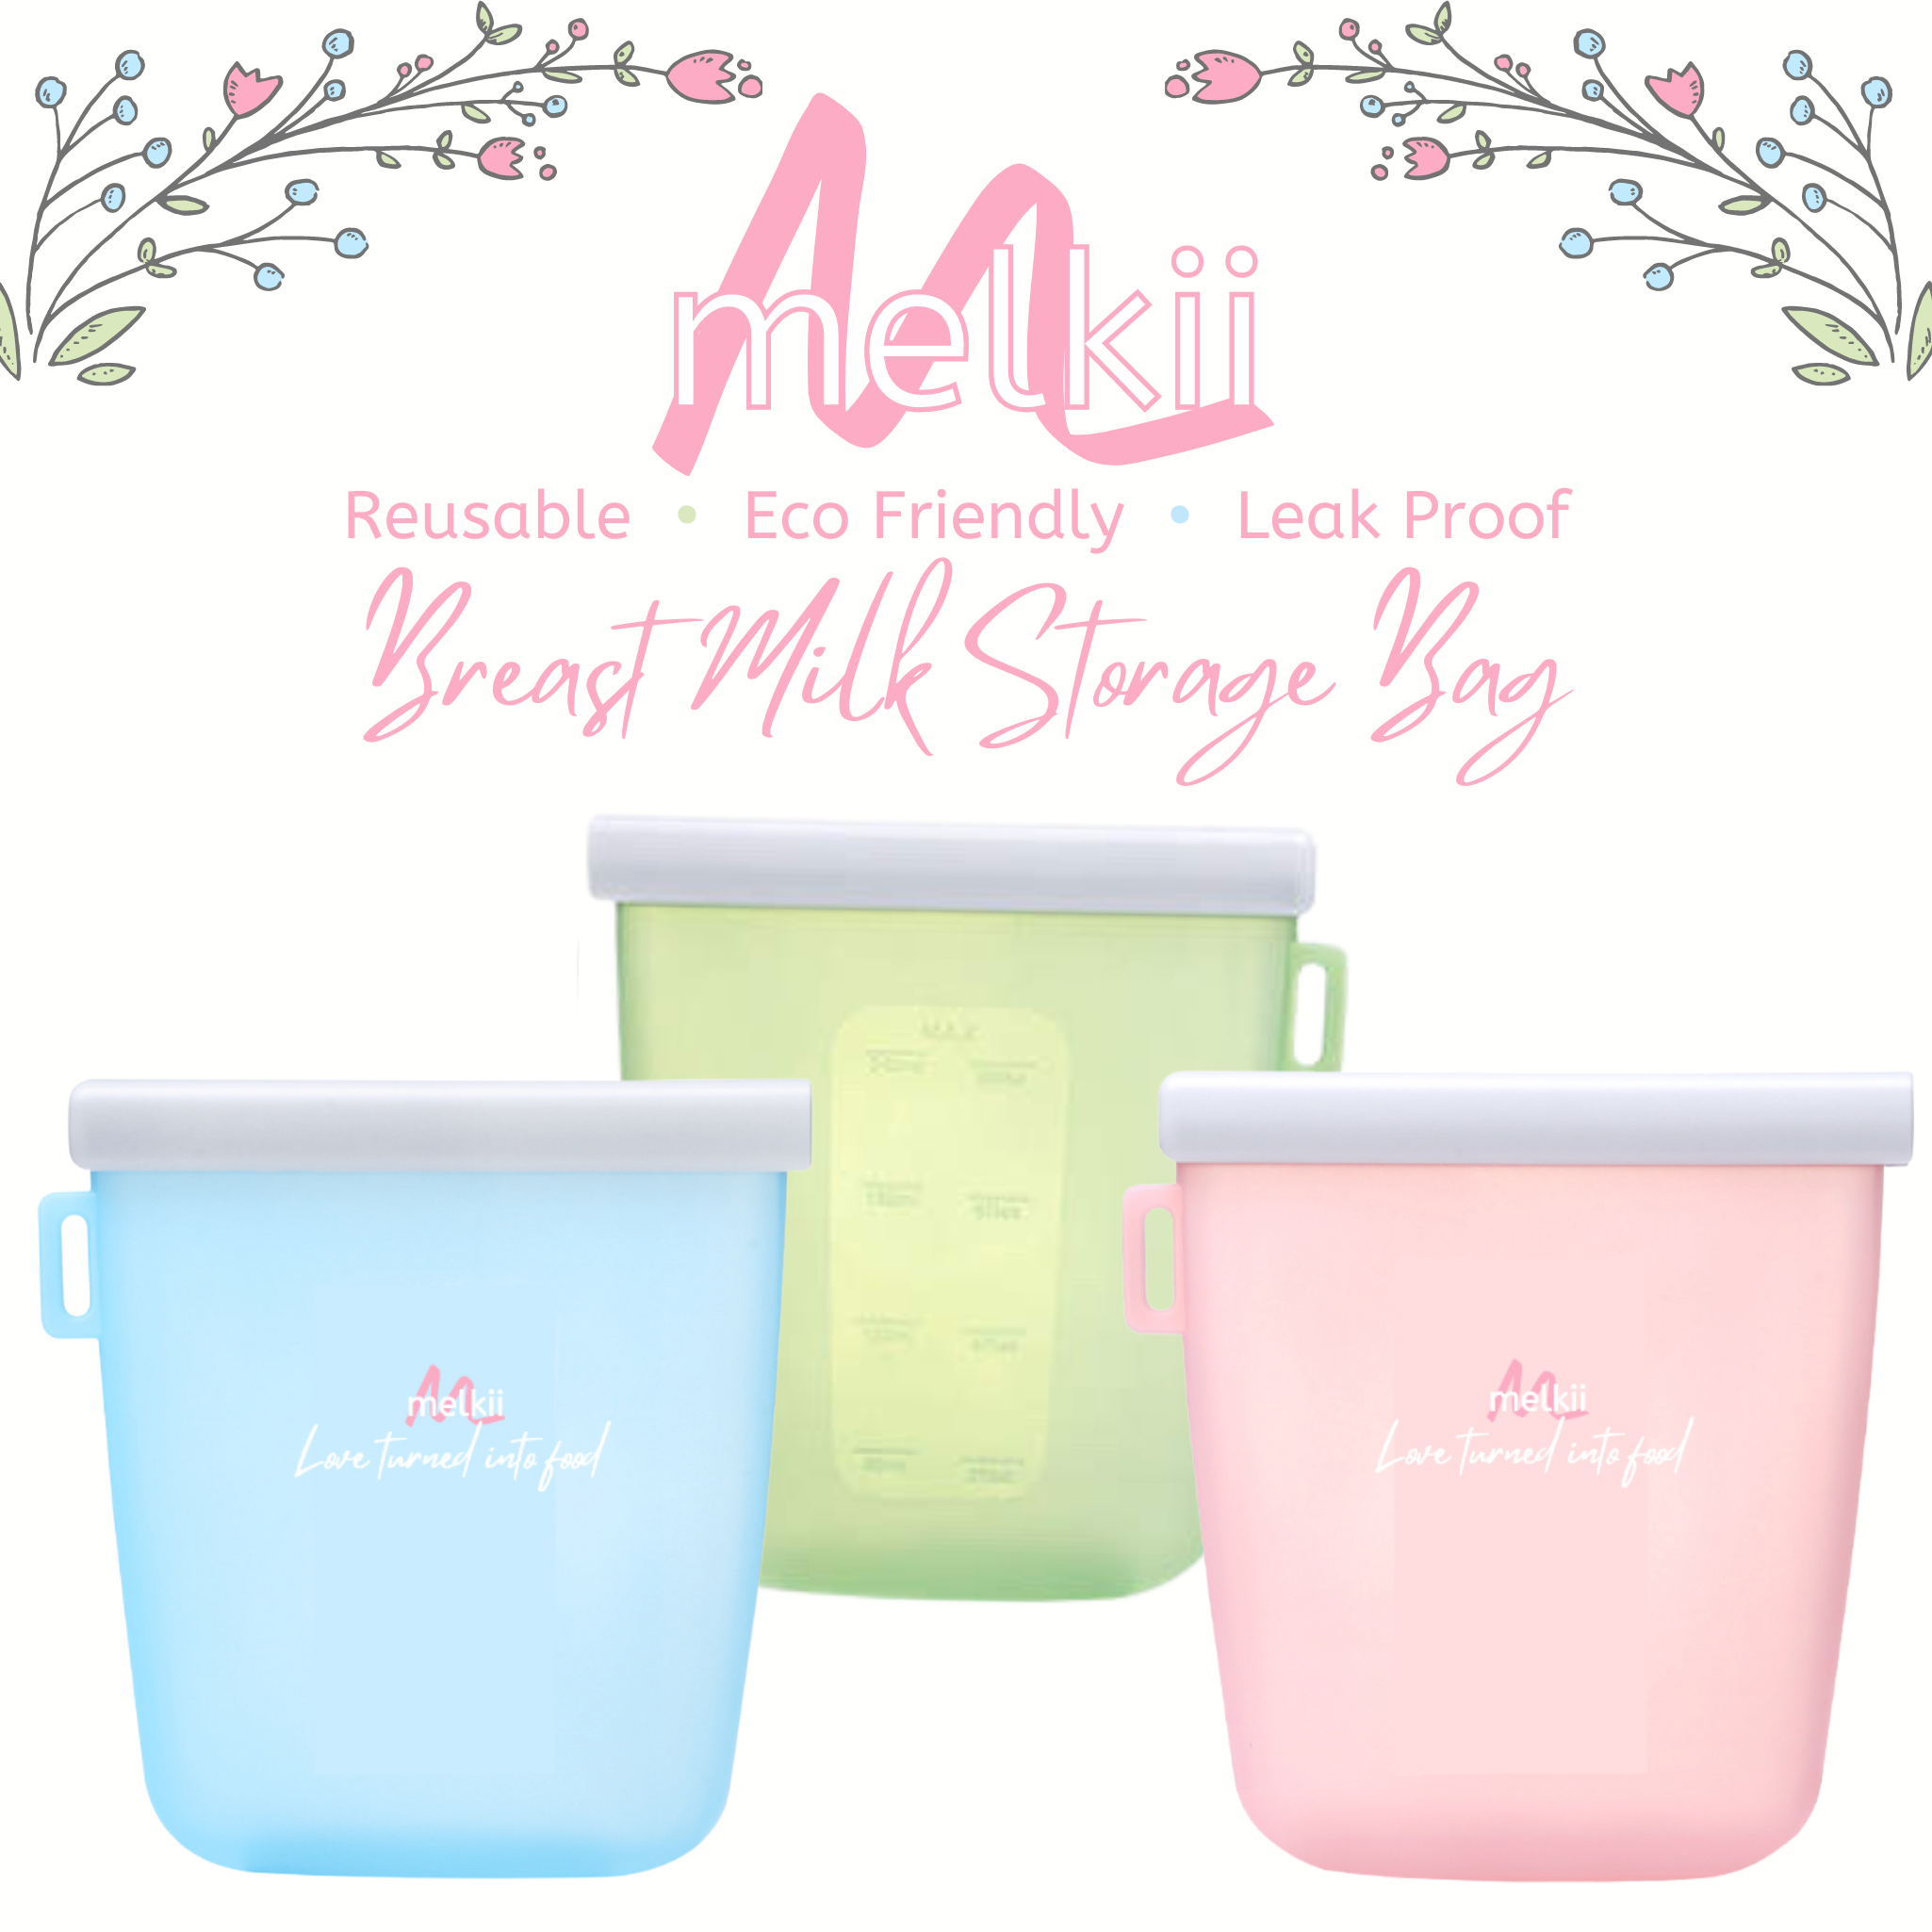 Melkii Reusable Milk Storage Bags